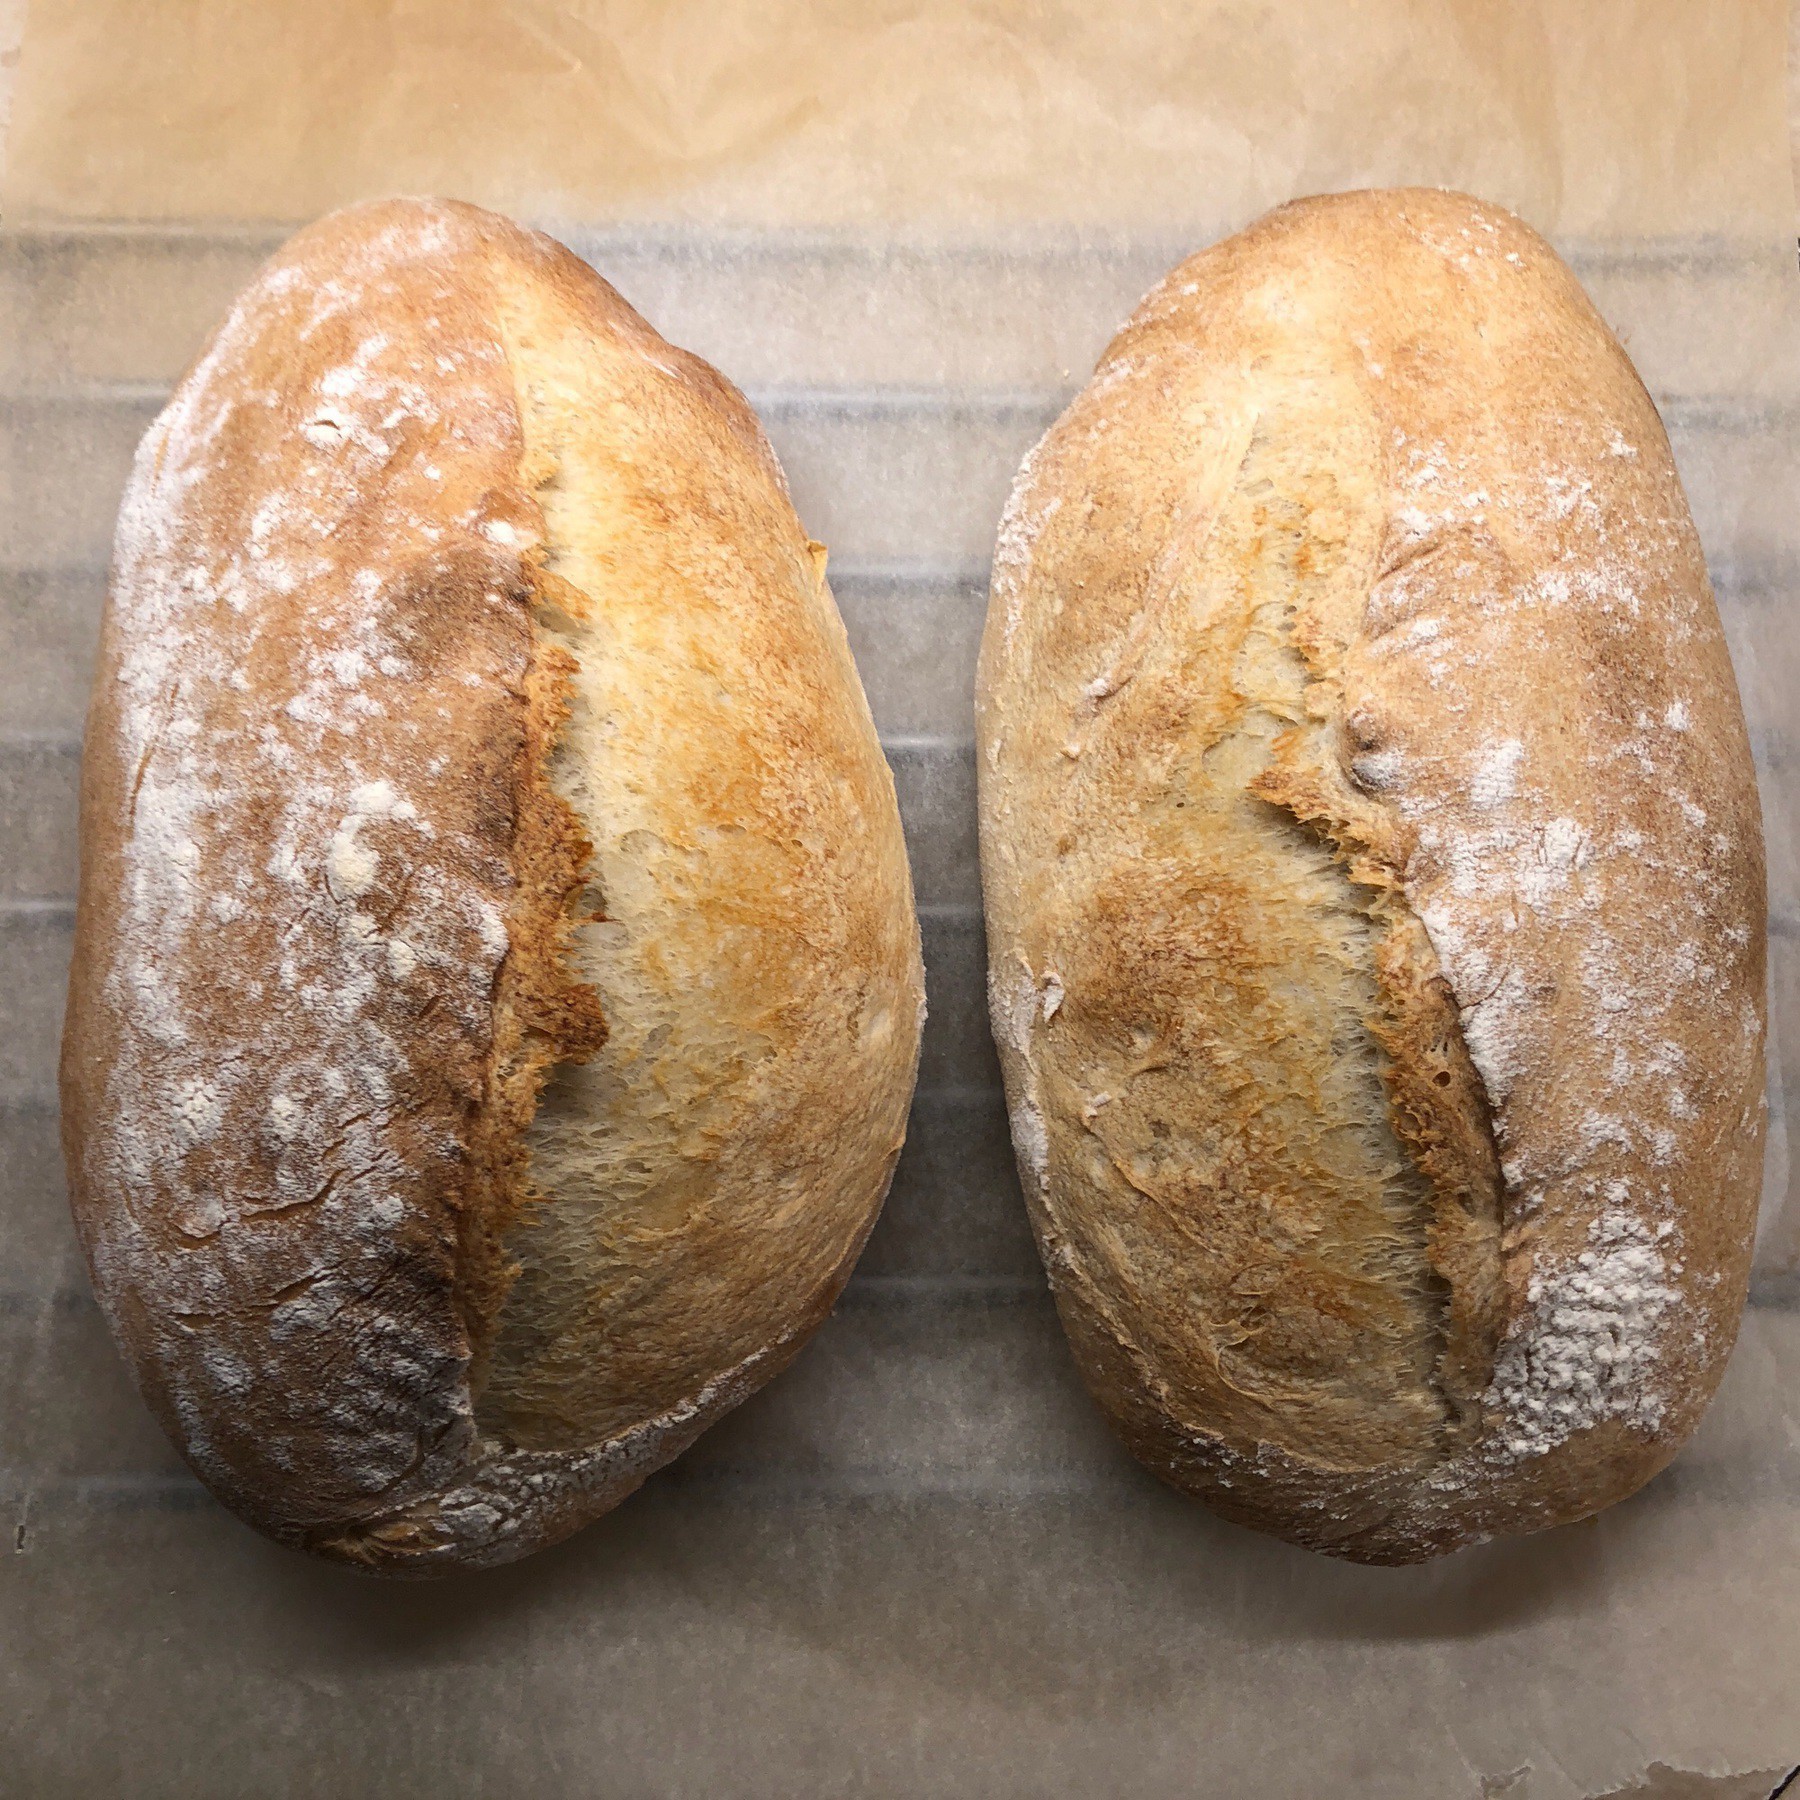 Sourdough bread on cooling rack.